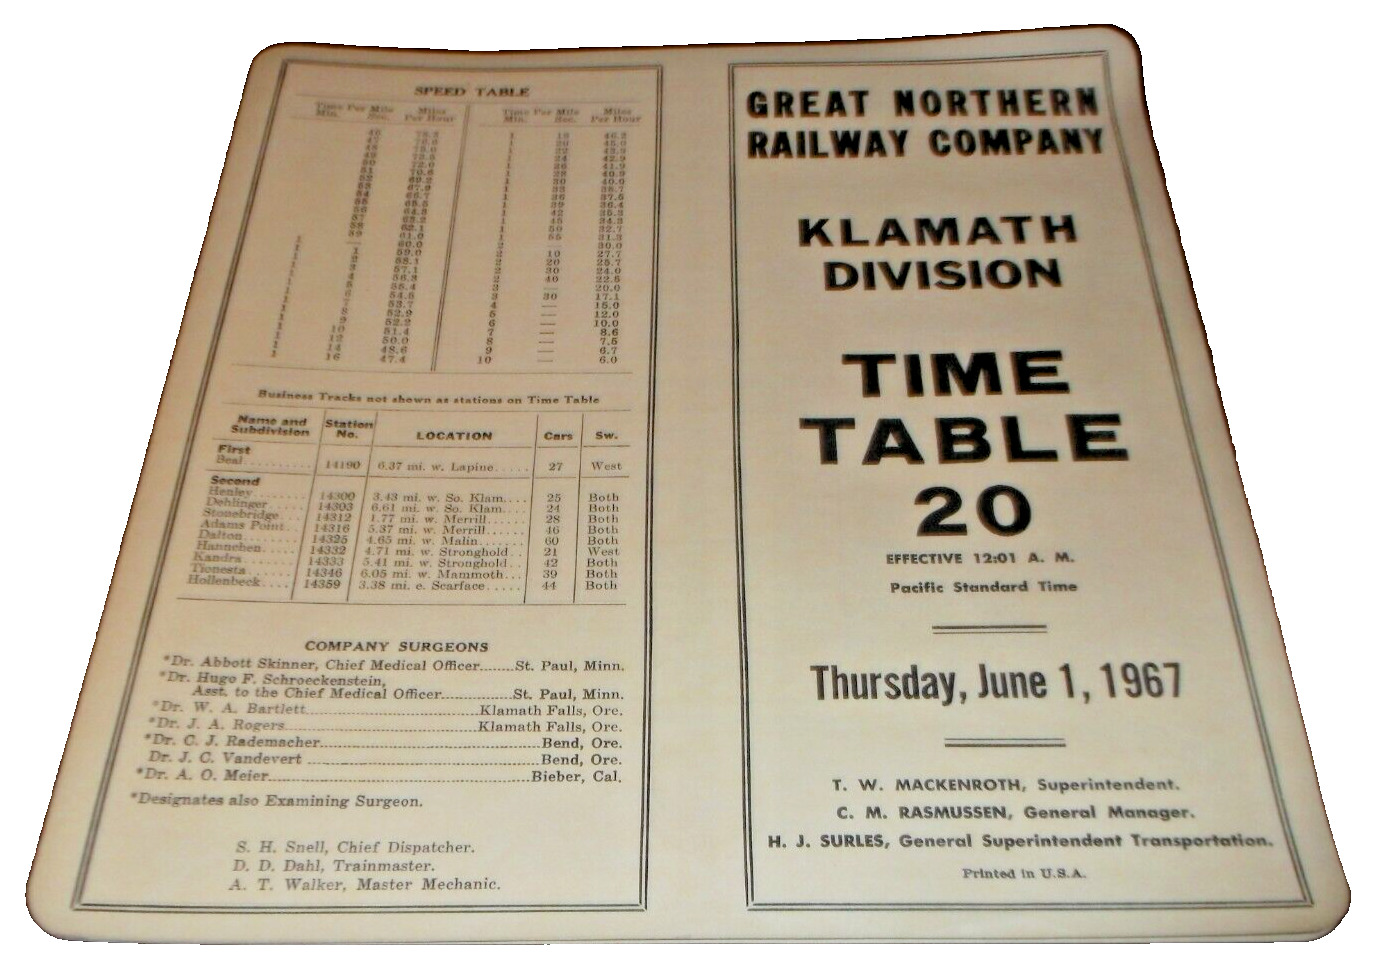 JUNE 1967 GREAT NORTHERN RAILWAY KLAMATH DIVISION EMPLOYEE TIMETABLE #20